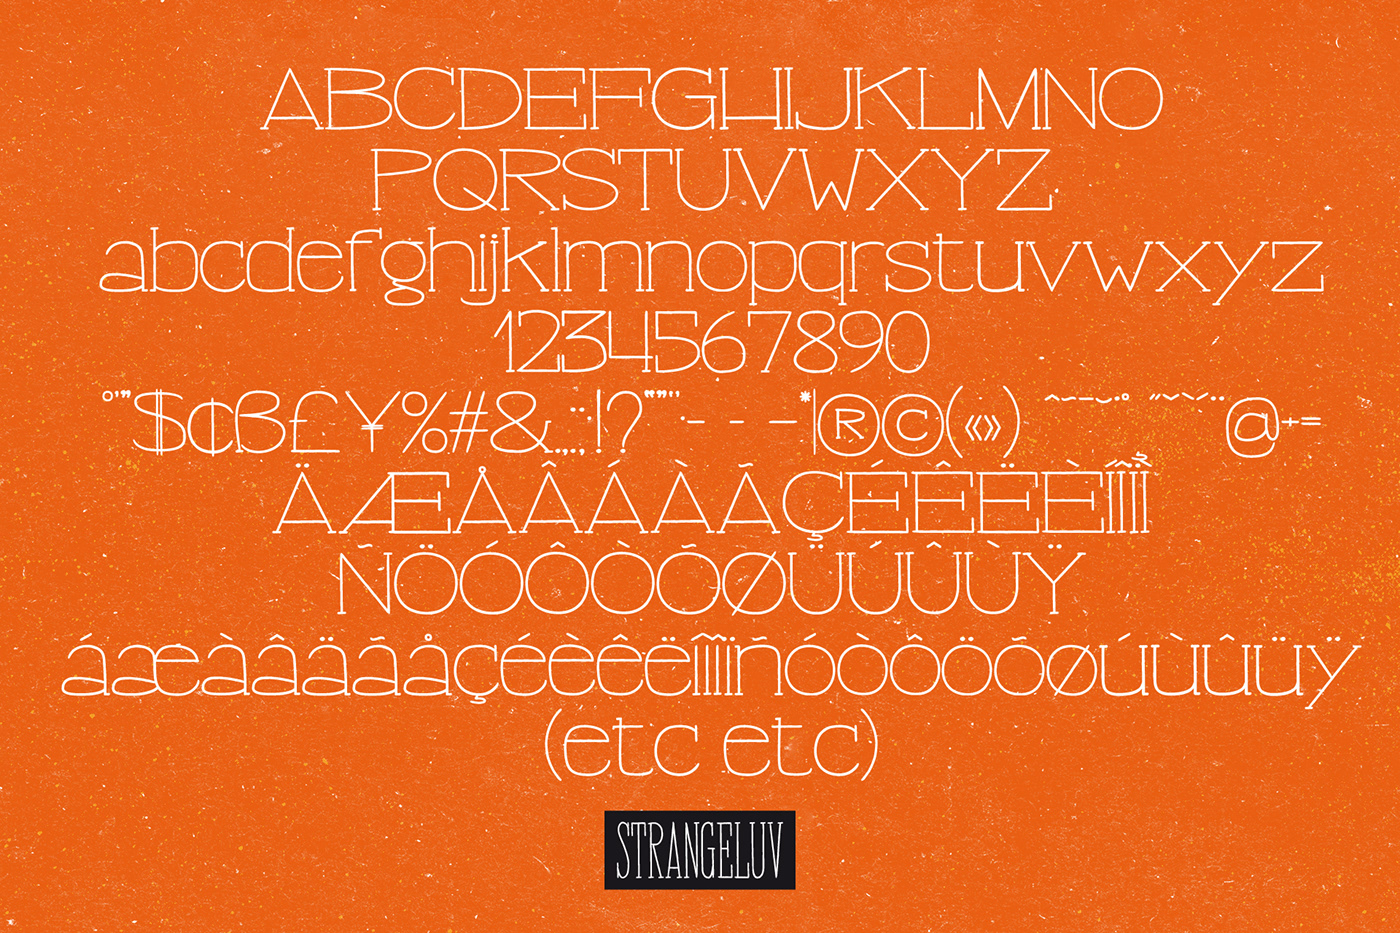 dr. strangelove font men in black Pablo Ferro Stanley Kubrick type type design typedesign Typeface typography  